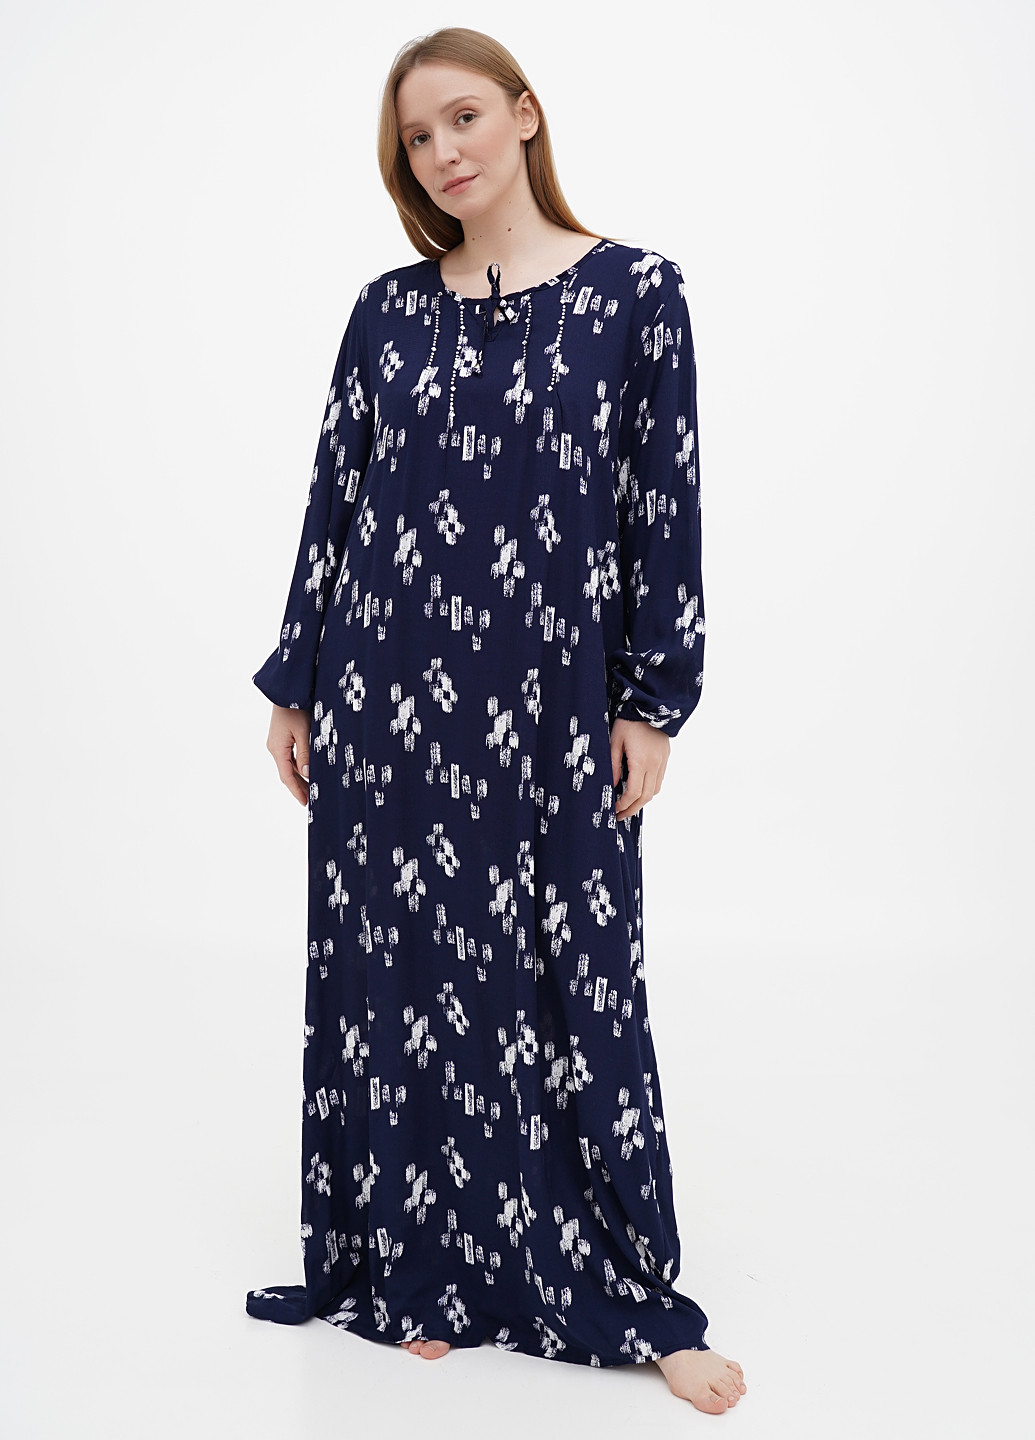 Темно-синее домашнее платье Juliet deluxe с абстрактным узором